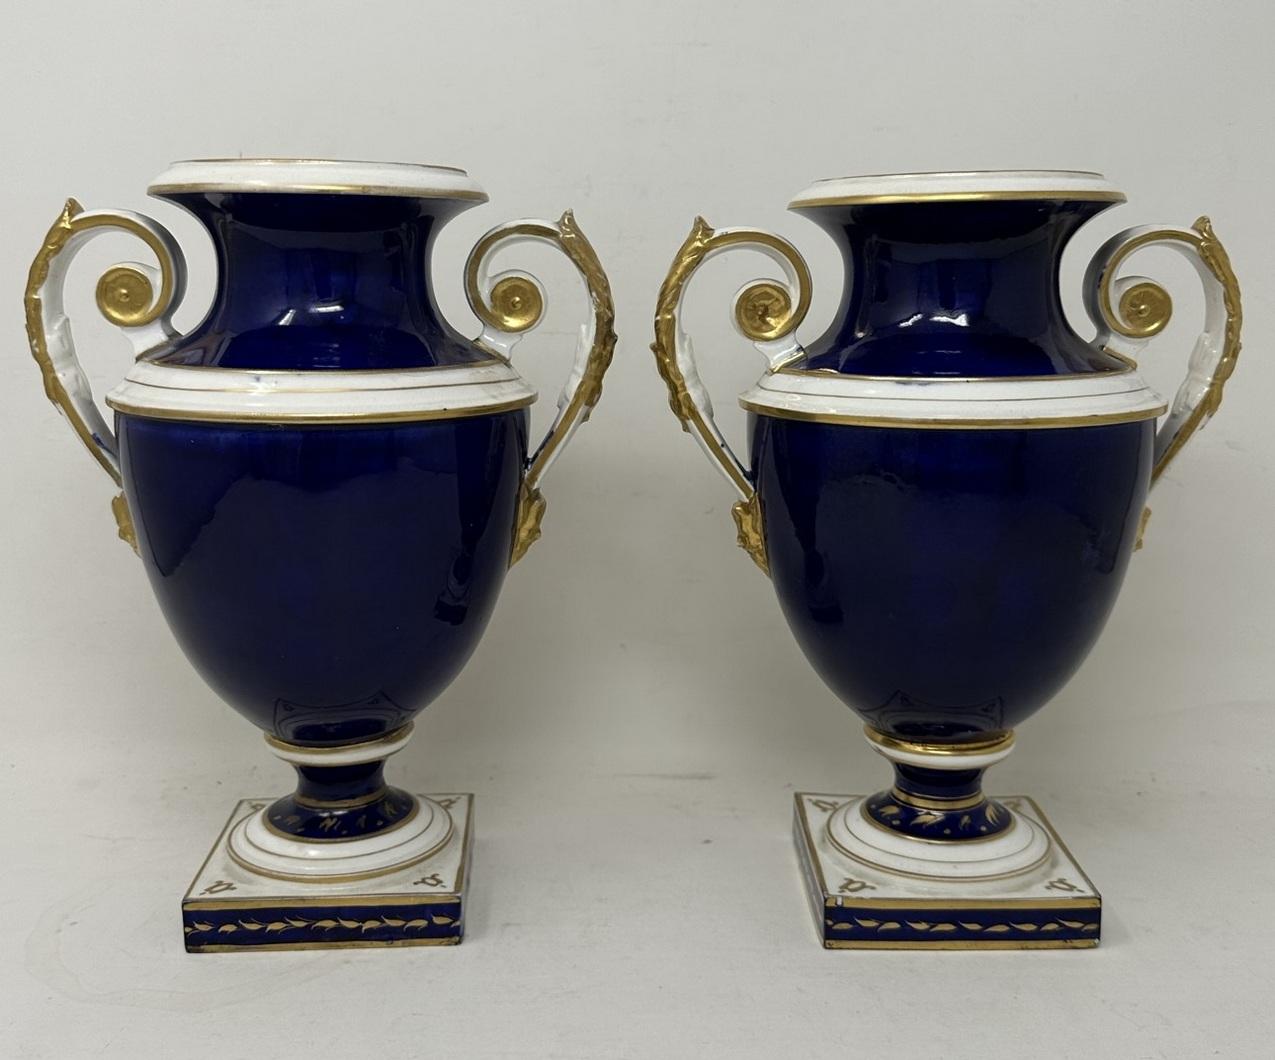 Antique Garniture English Royal Crown Derby Porcelain Vases by Thomas Steel 19C  For Sale 4